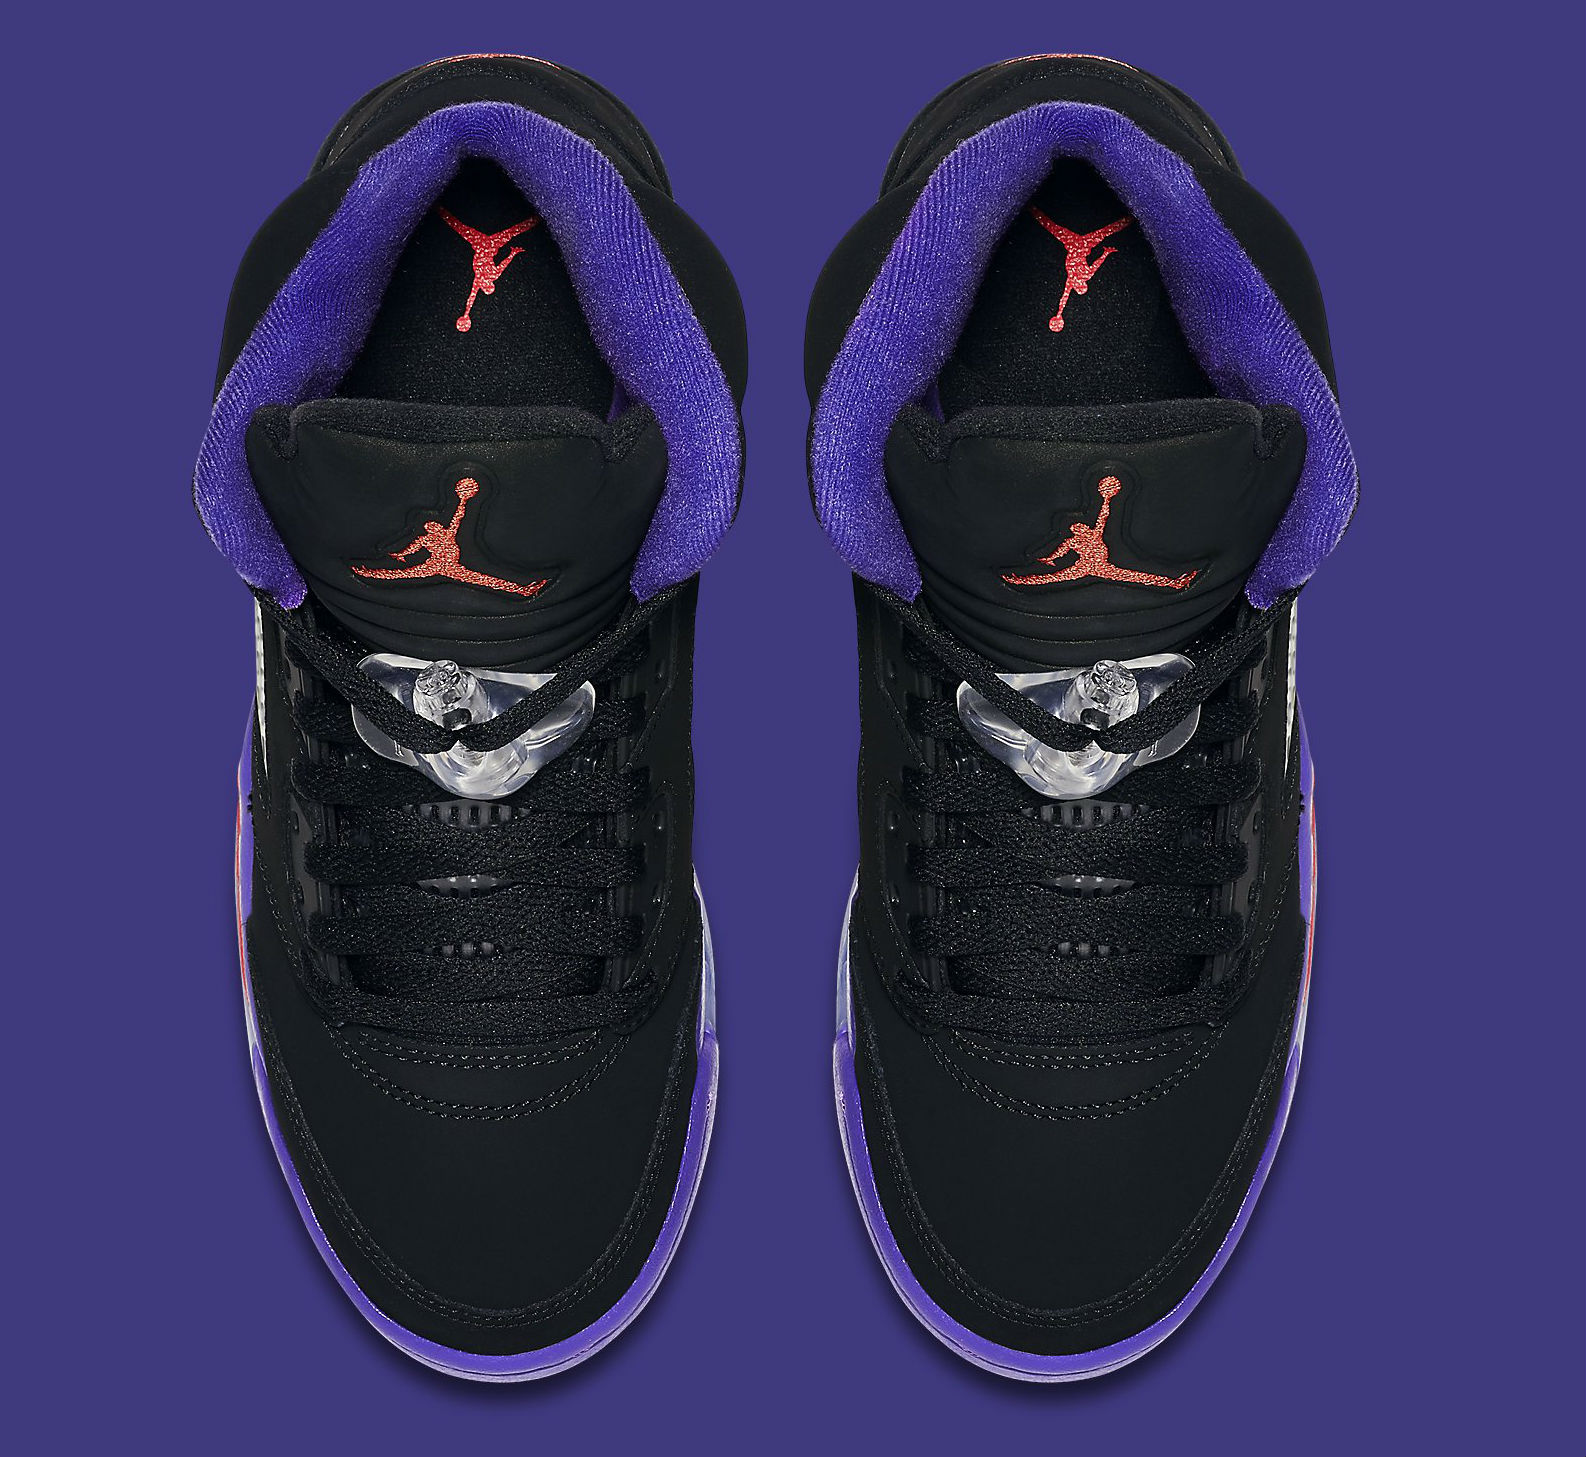 black and purple jordan 5s